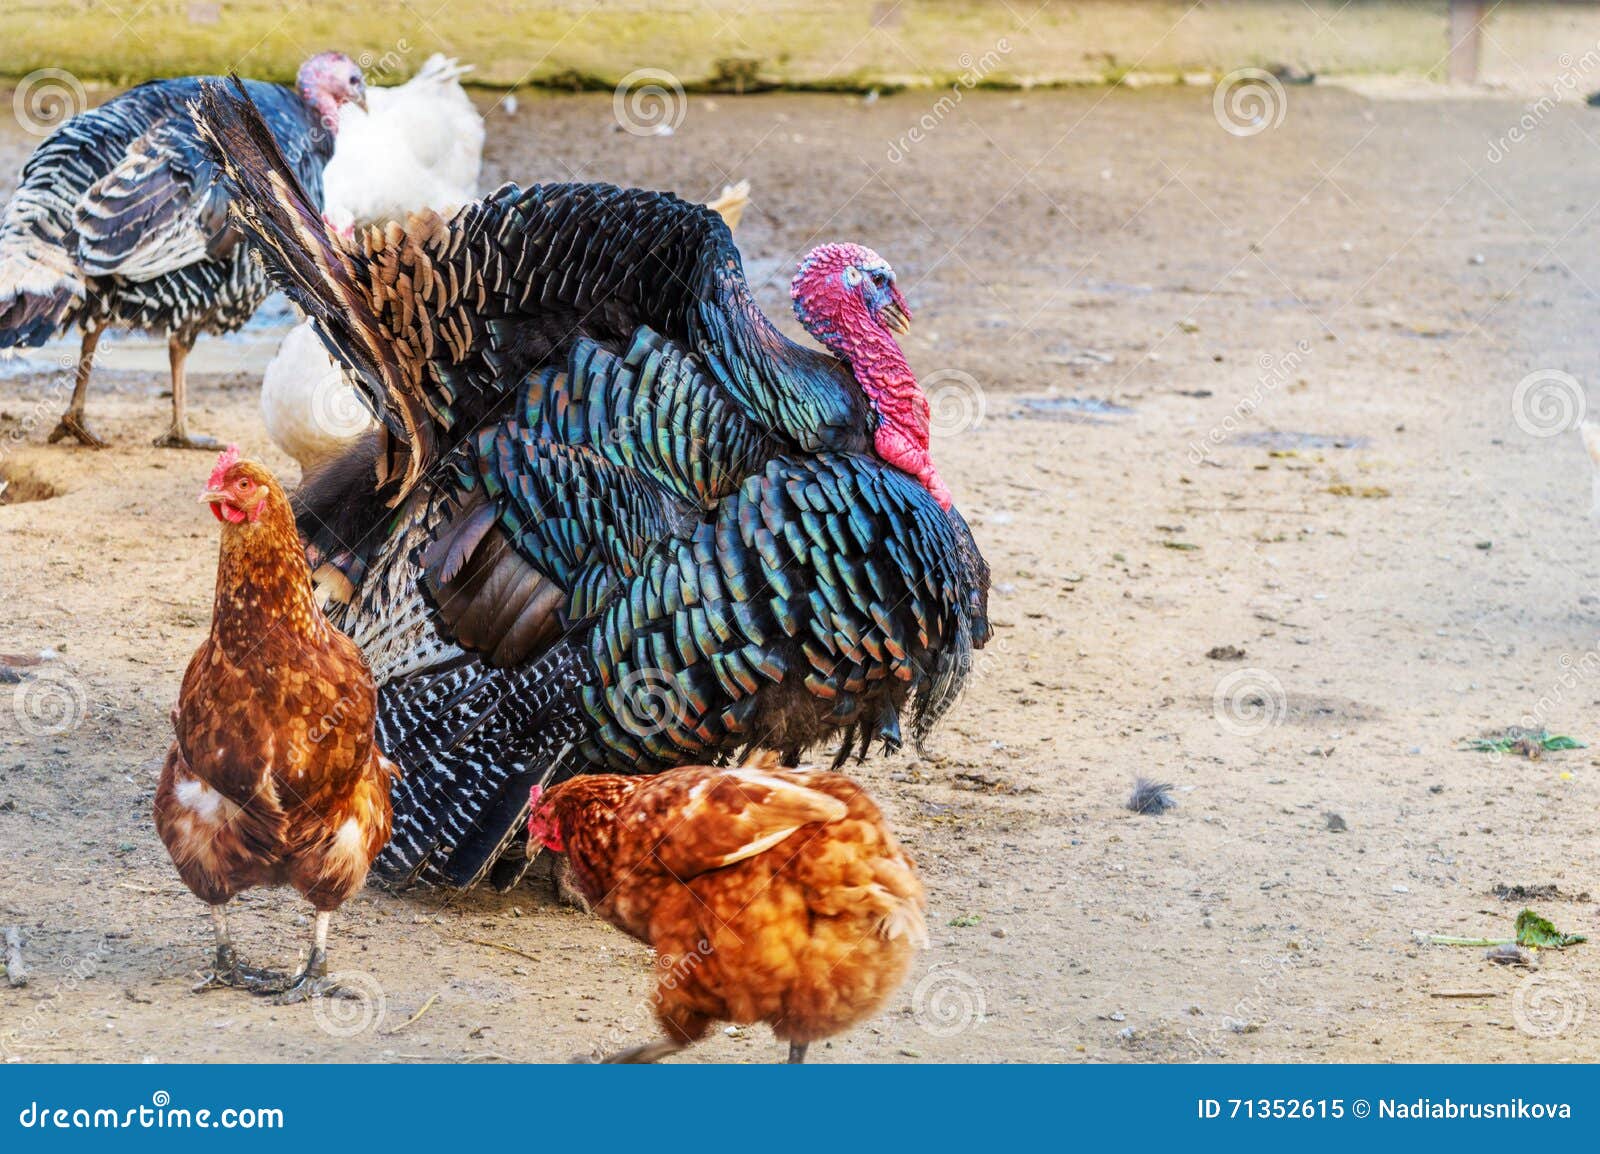 Turkish chicken stock image. Image of kuropatkin, turkey - 71352615